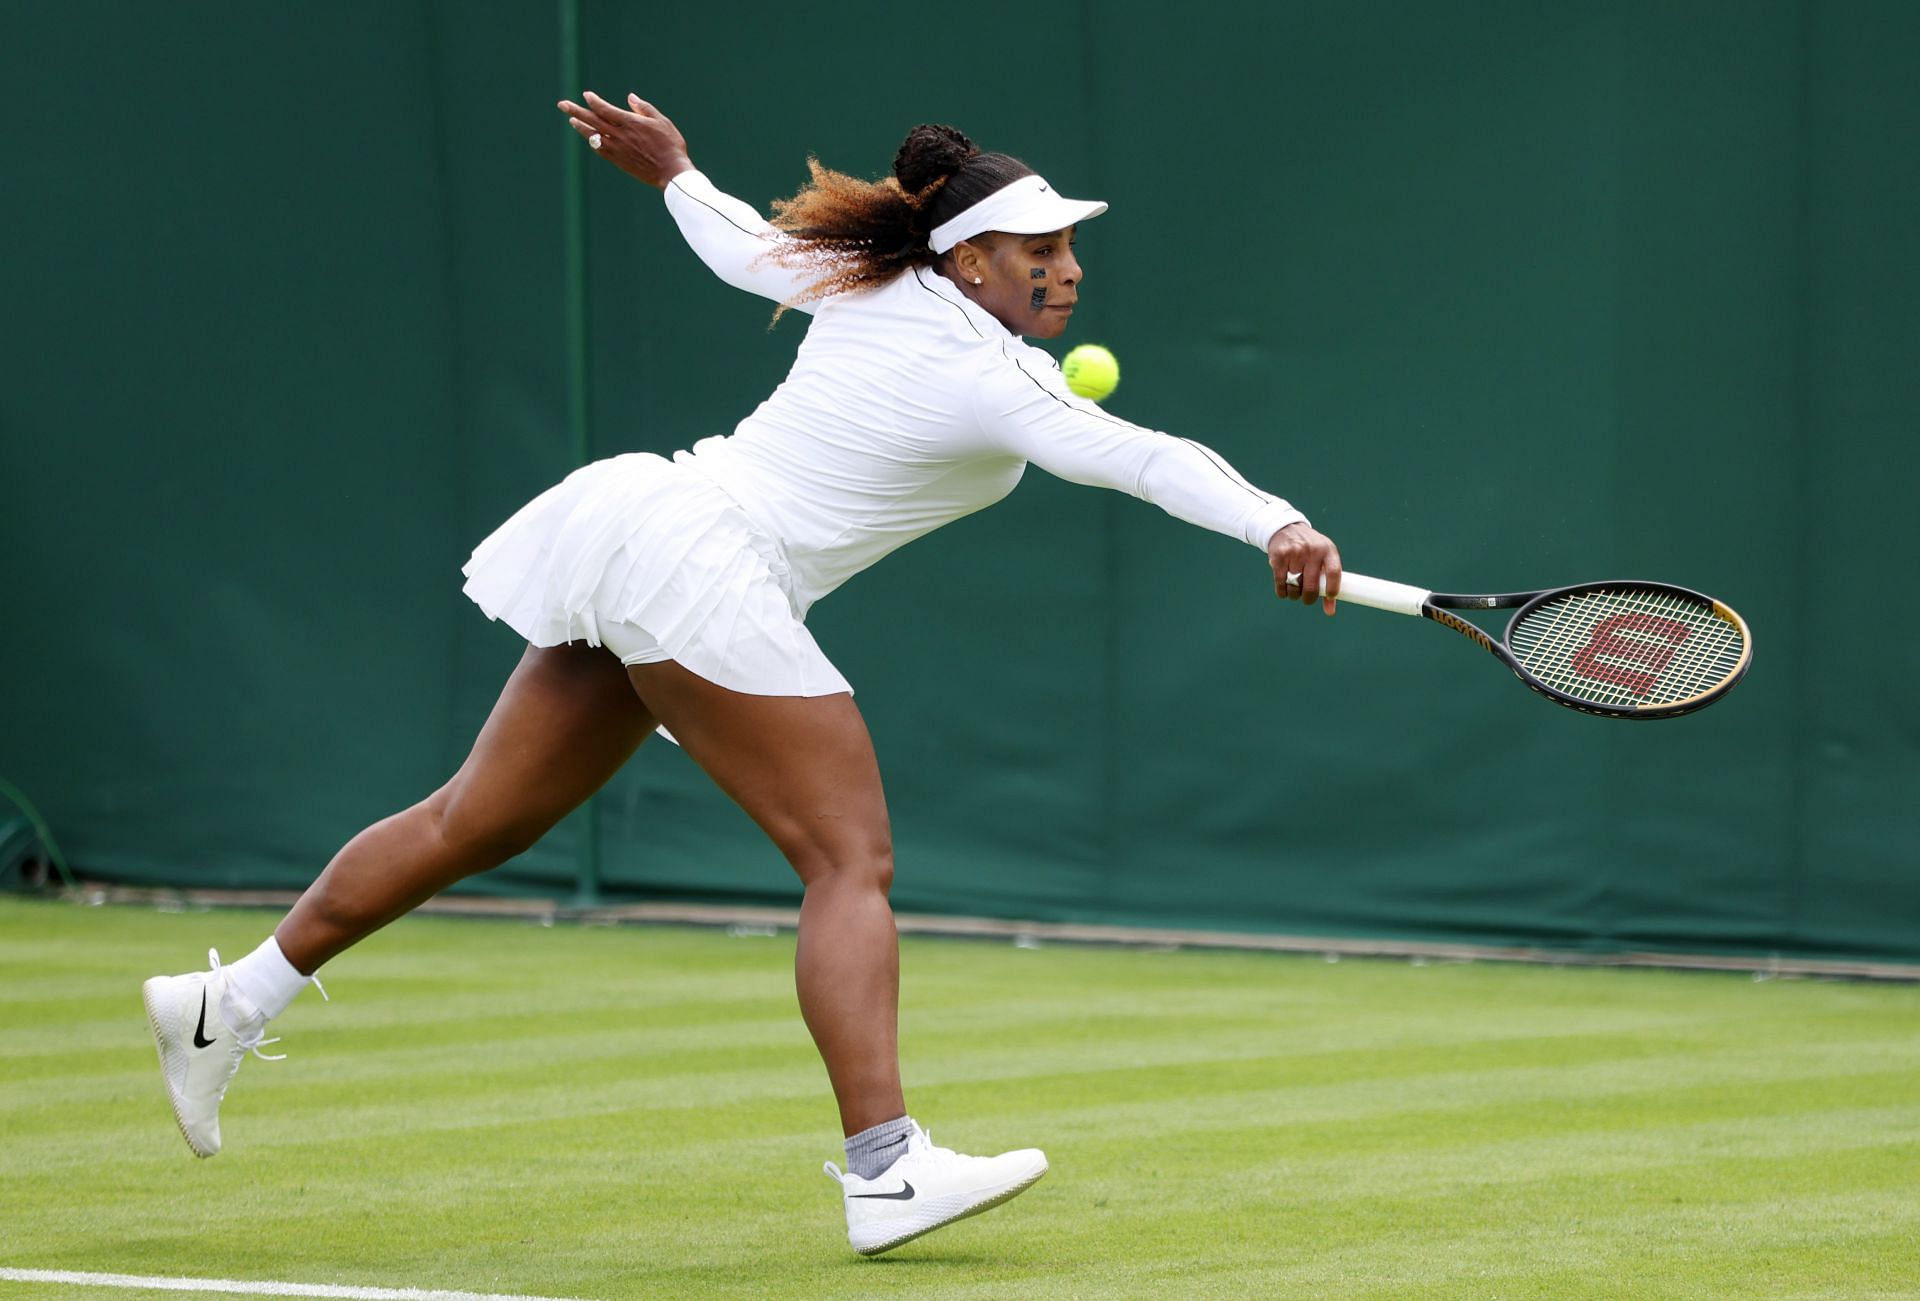 Serena Williams stretches to reach a ball